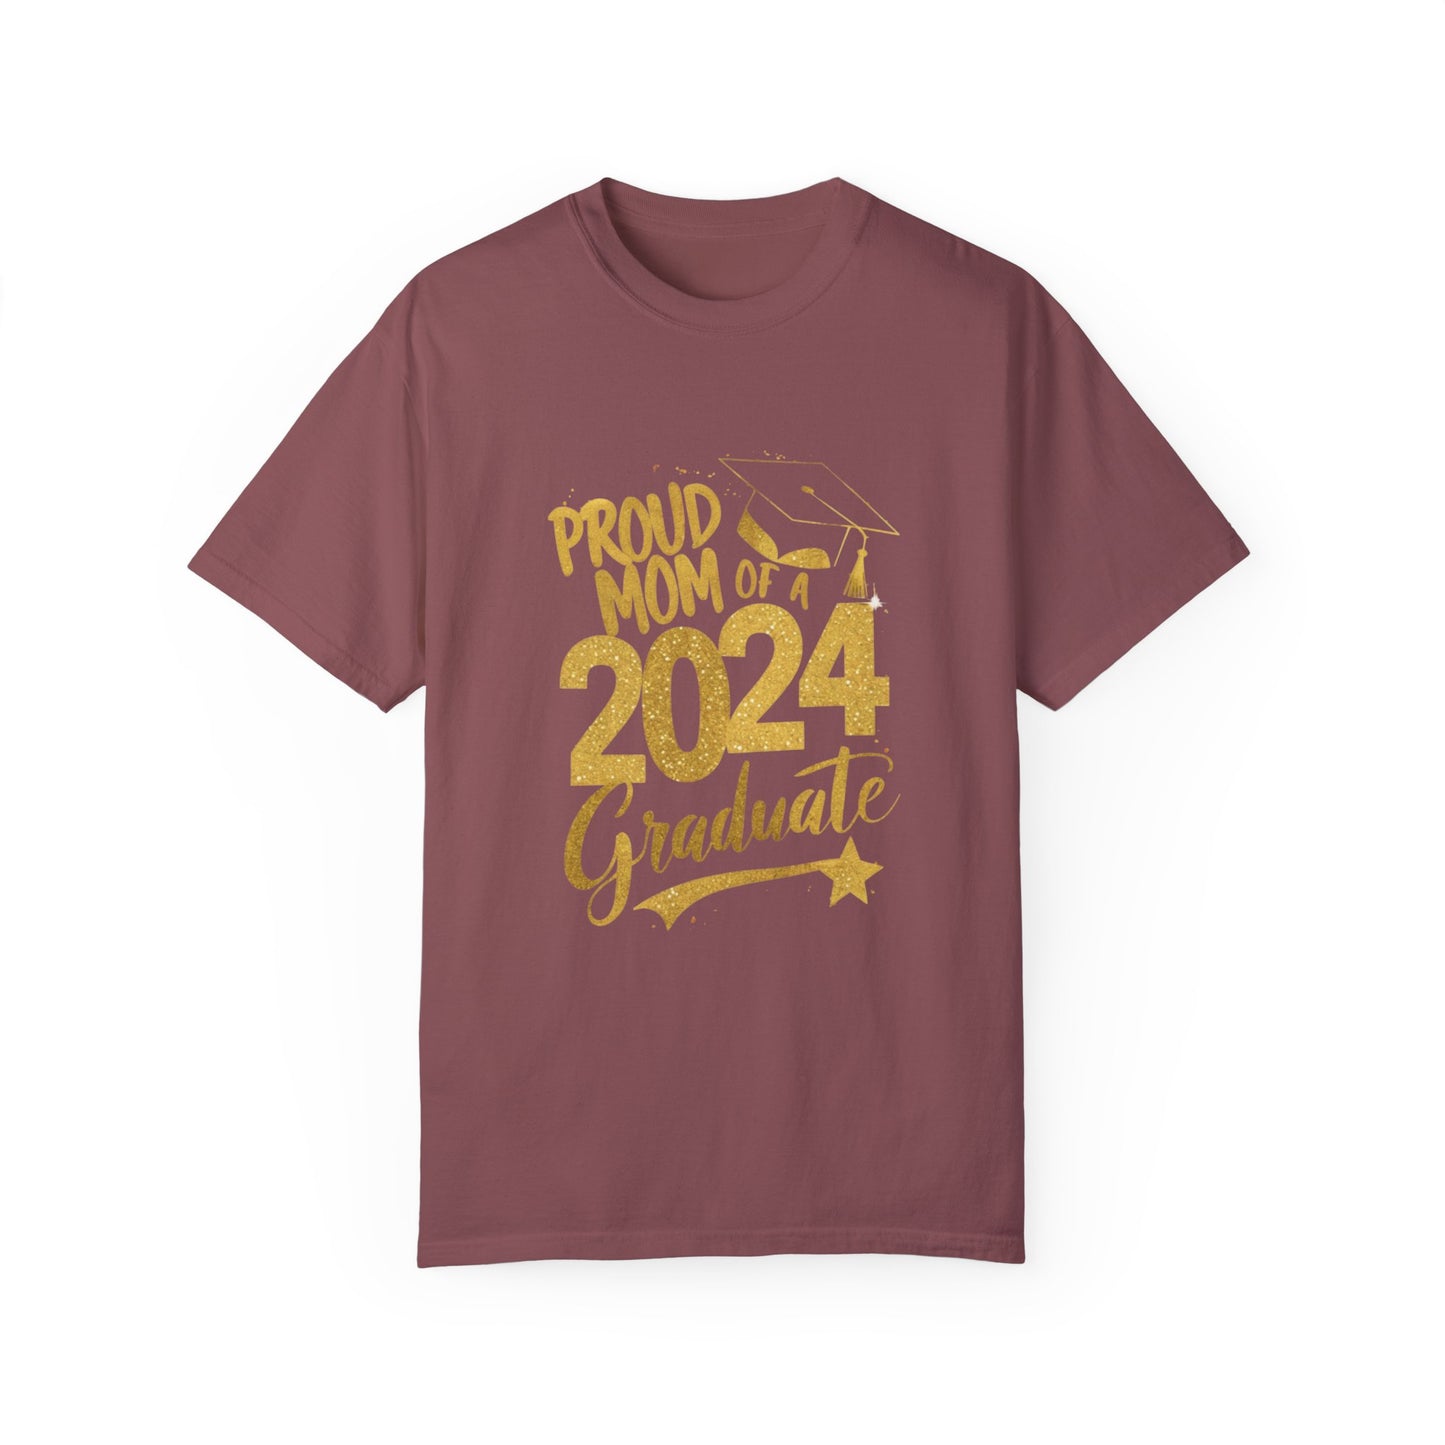 Proud of Mom 2024 Graduate Unisex Garment-dyed T-shirt Cotton Funny Humorous Graphic Soft Premium Unisex Men Women Brick T-shirt Birthday Gift-5